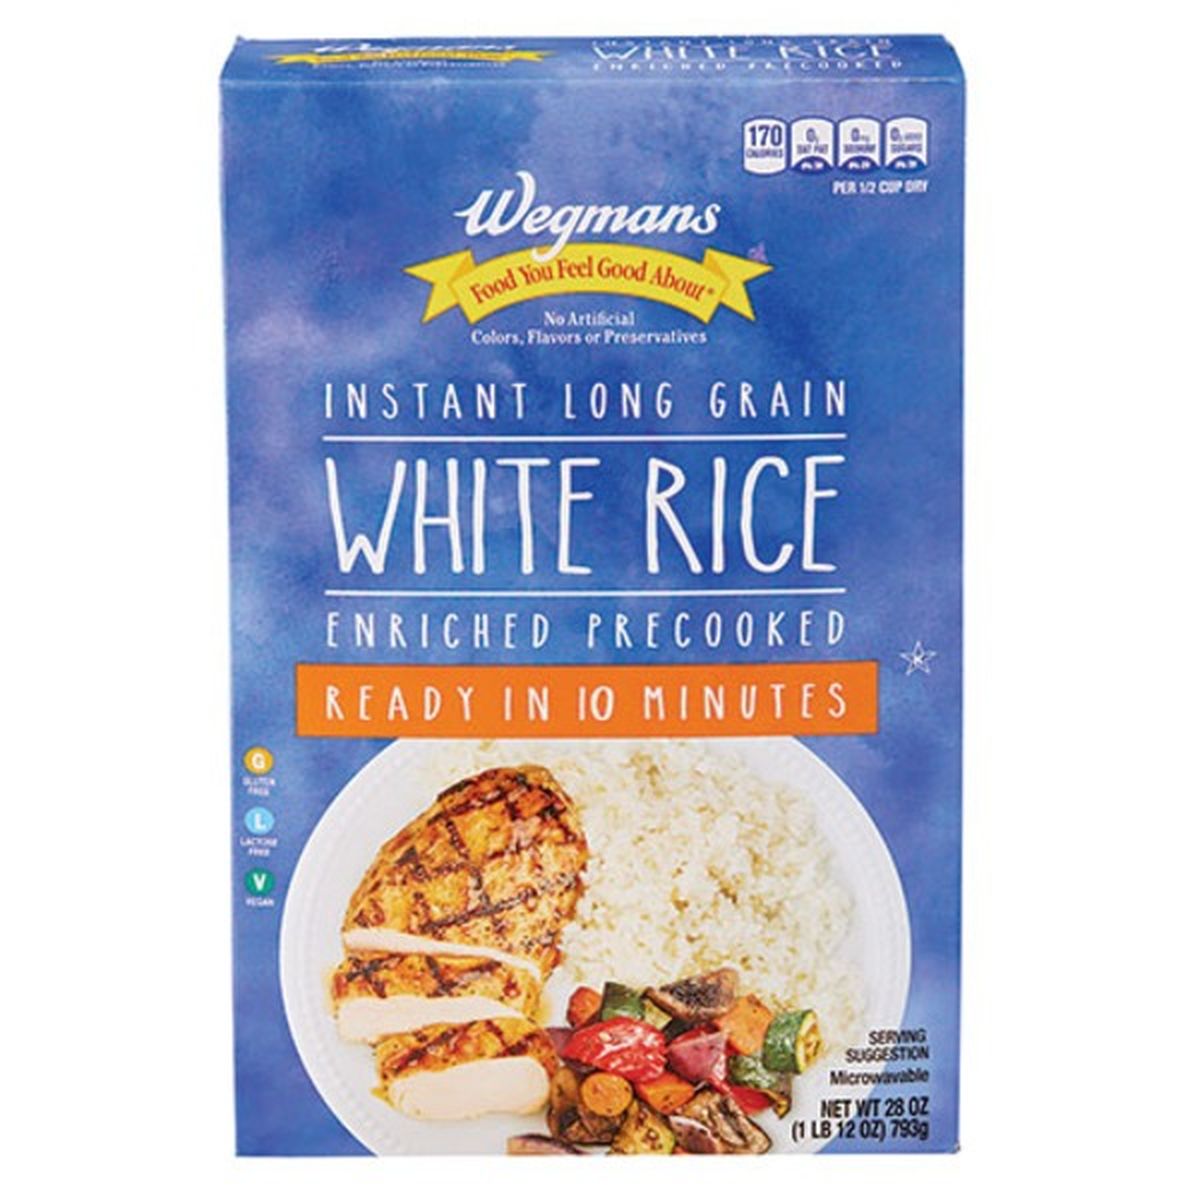 Calories in Wegmans Instant White Rice